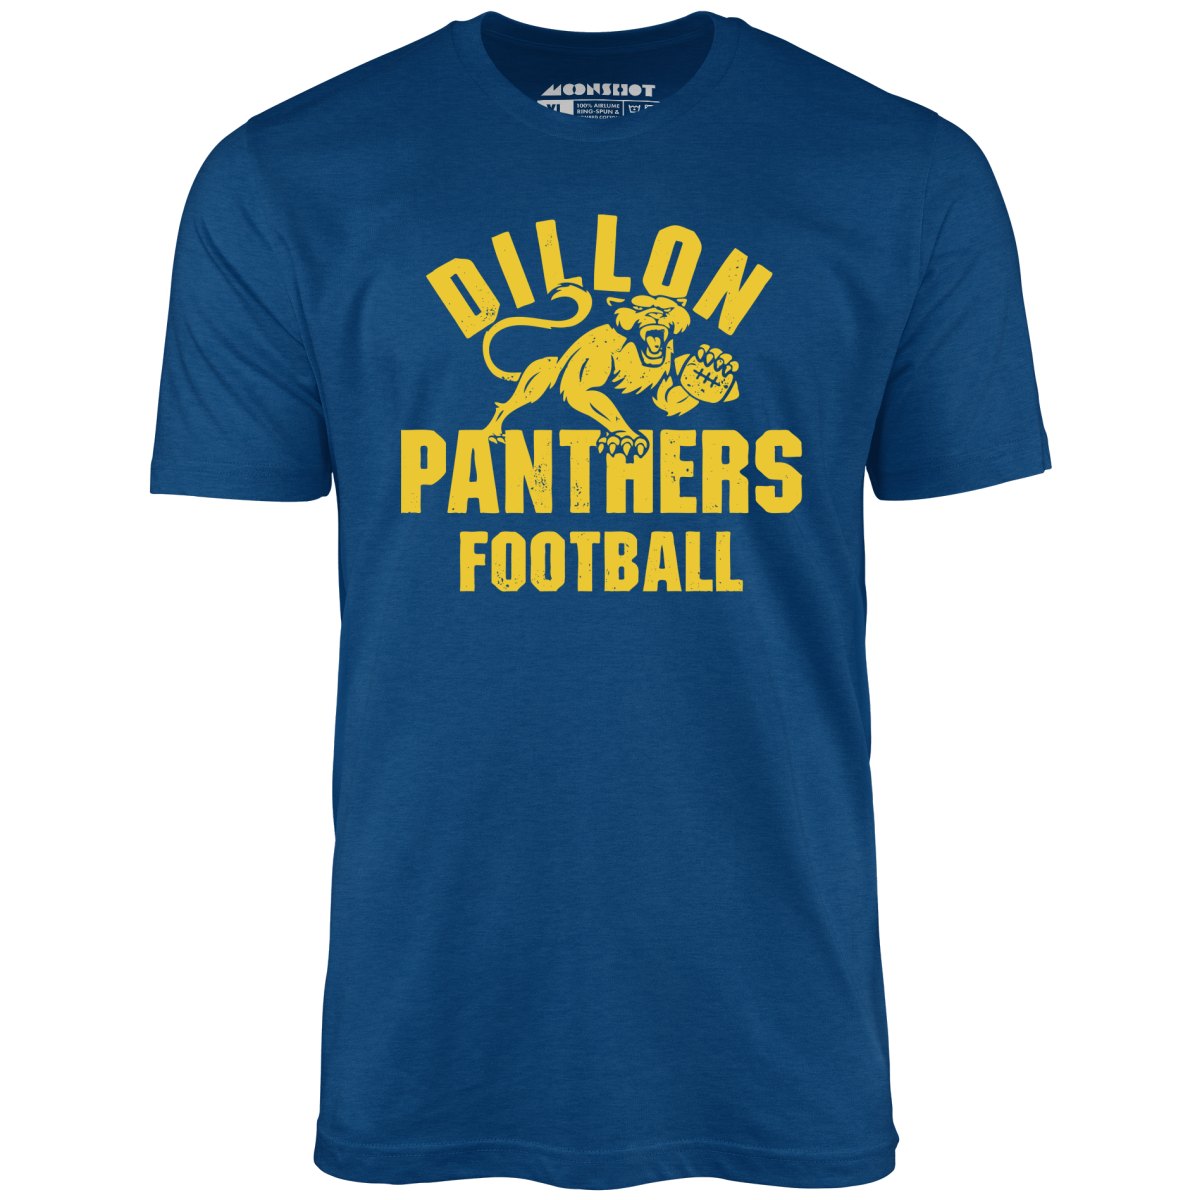 Dillon Panthers Football - Unisex T-Shirt